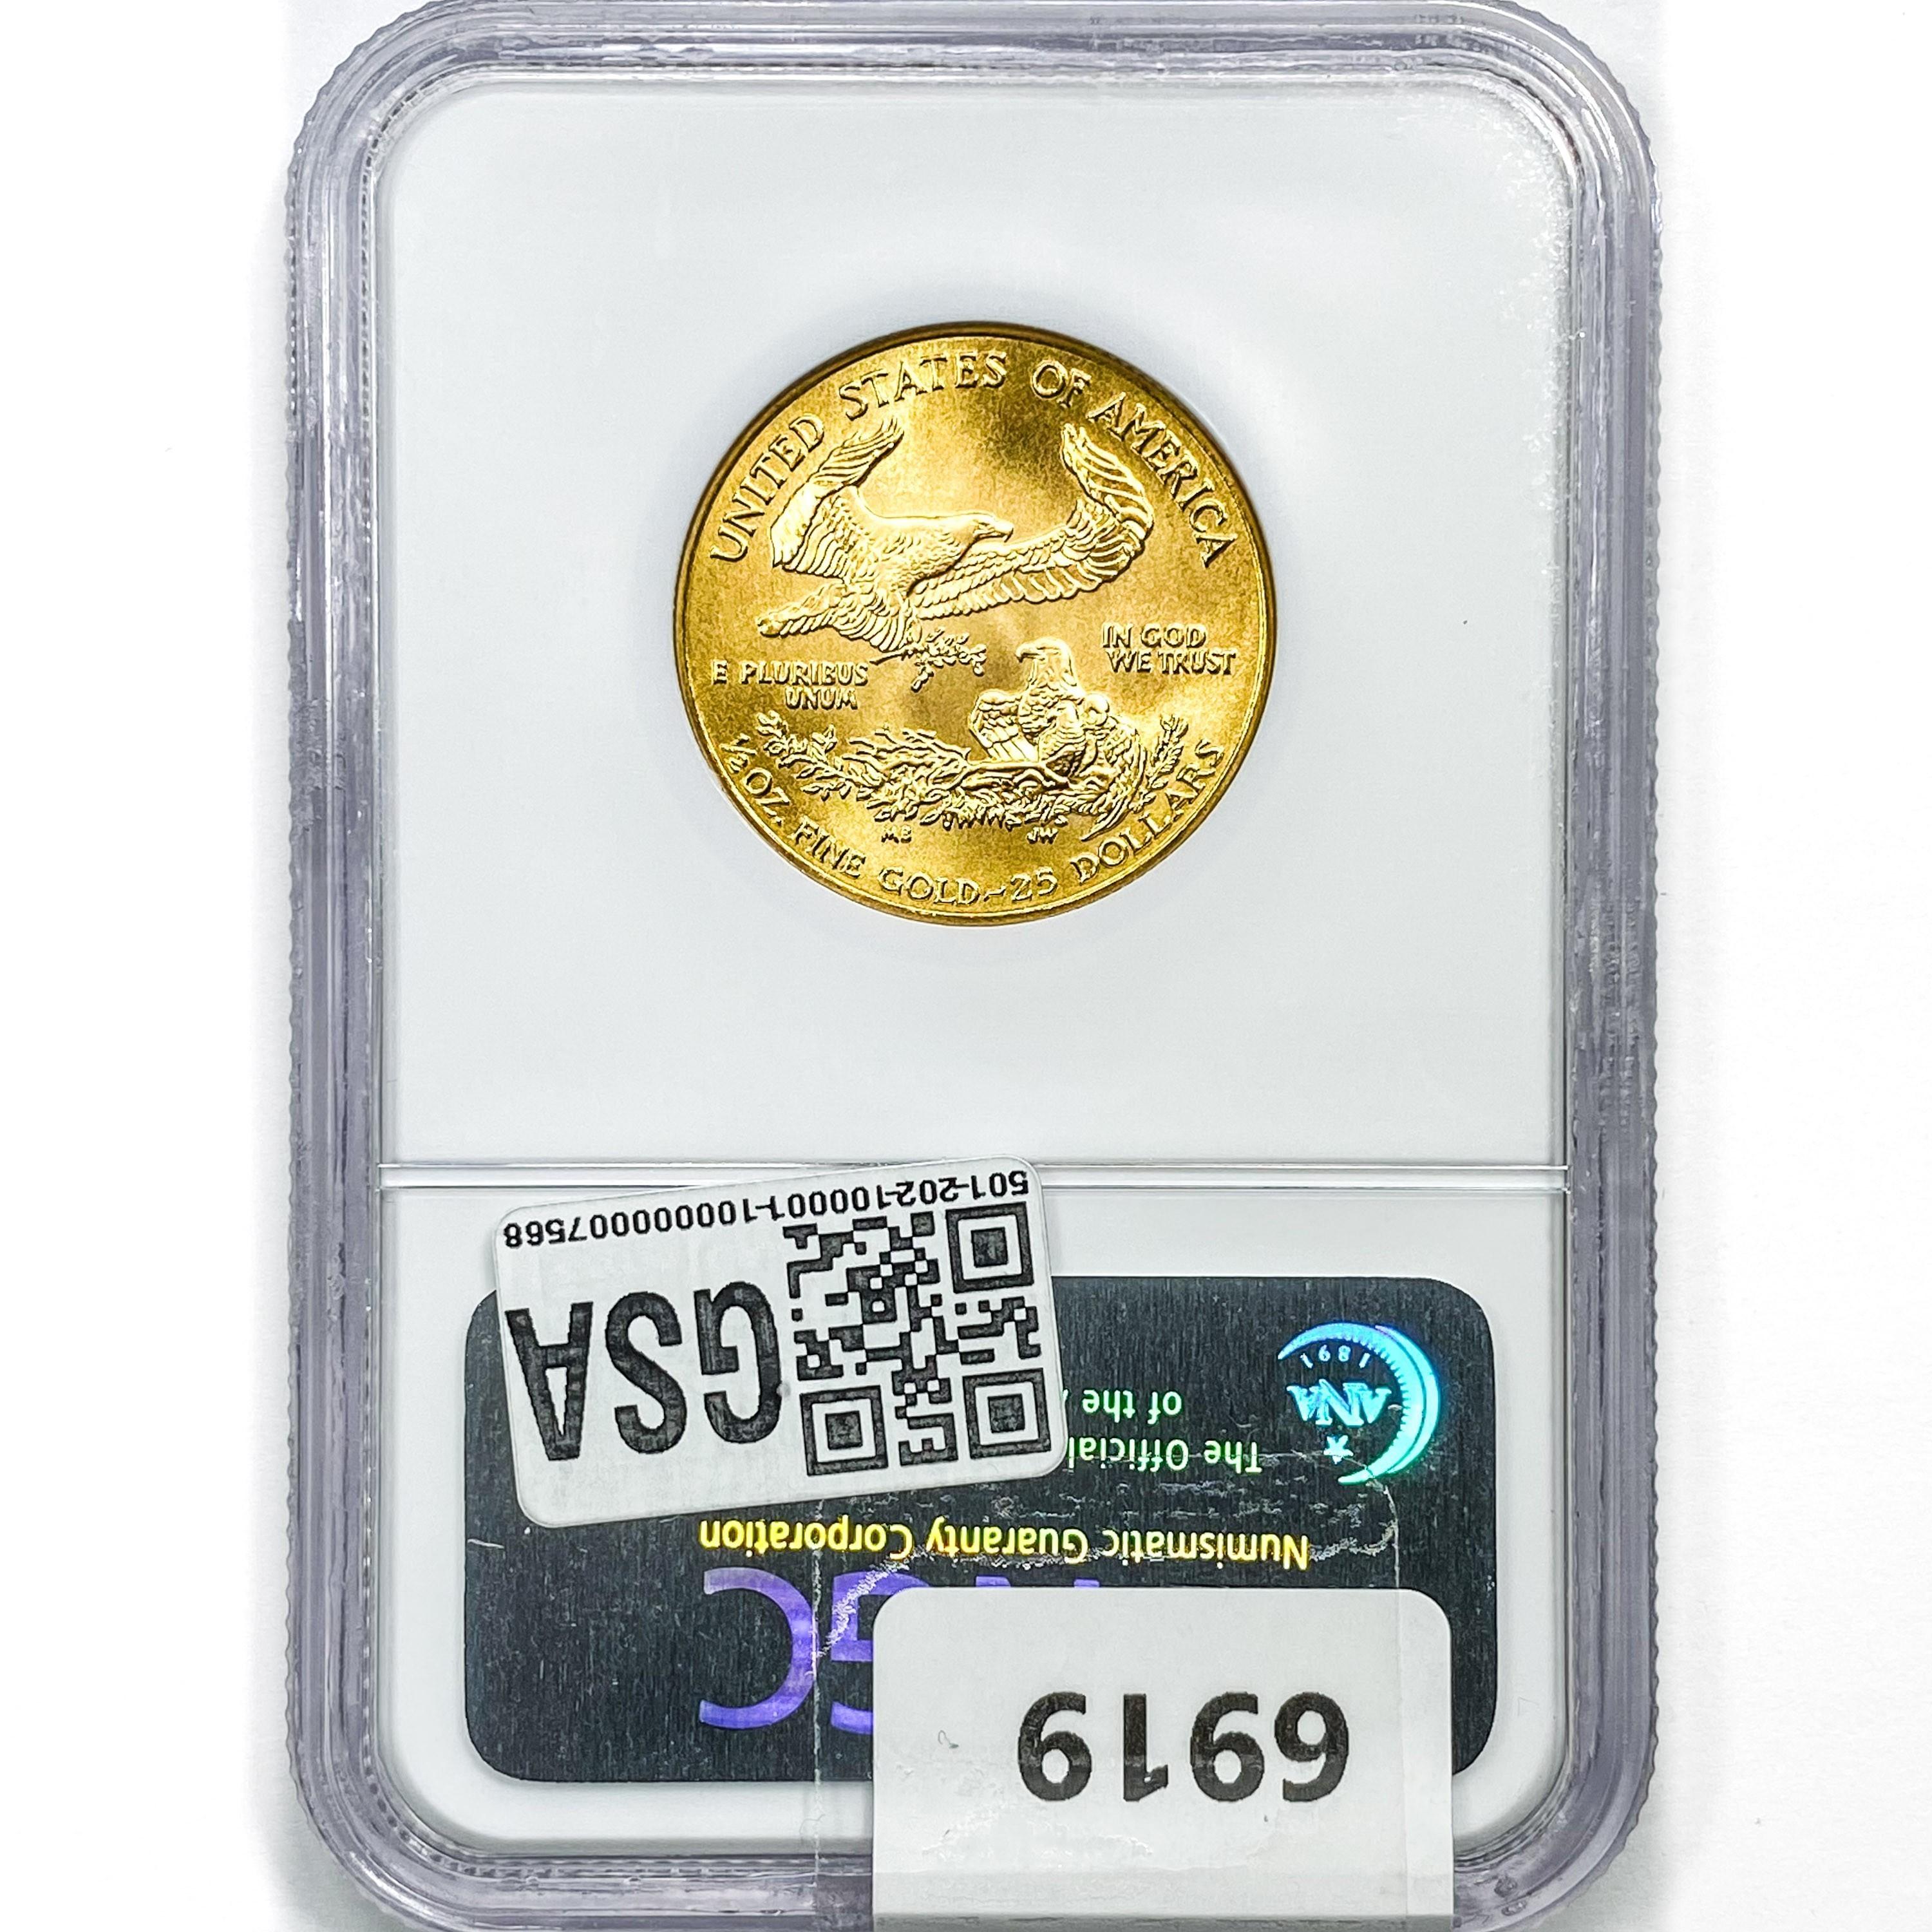 2007 $25 1/2oz. American Gold Eagle NGC MS70